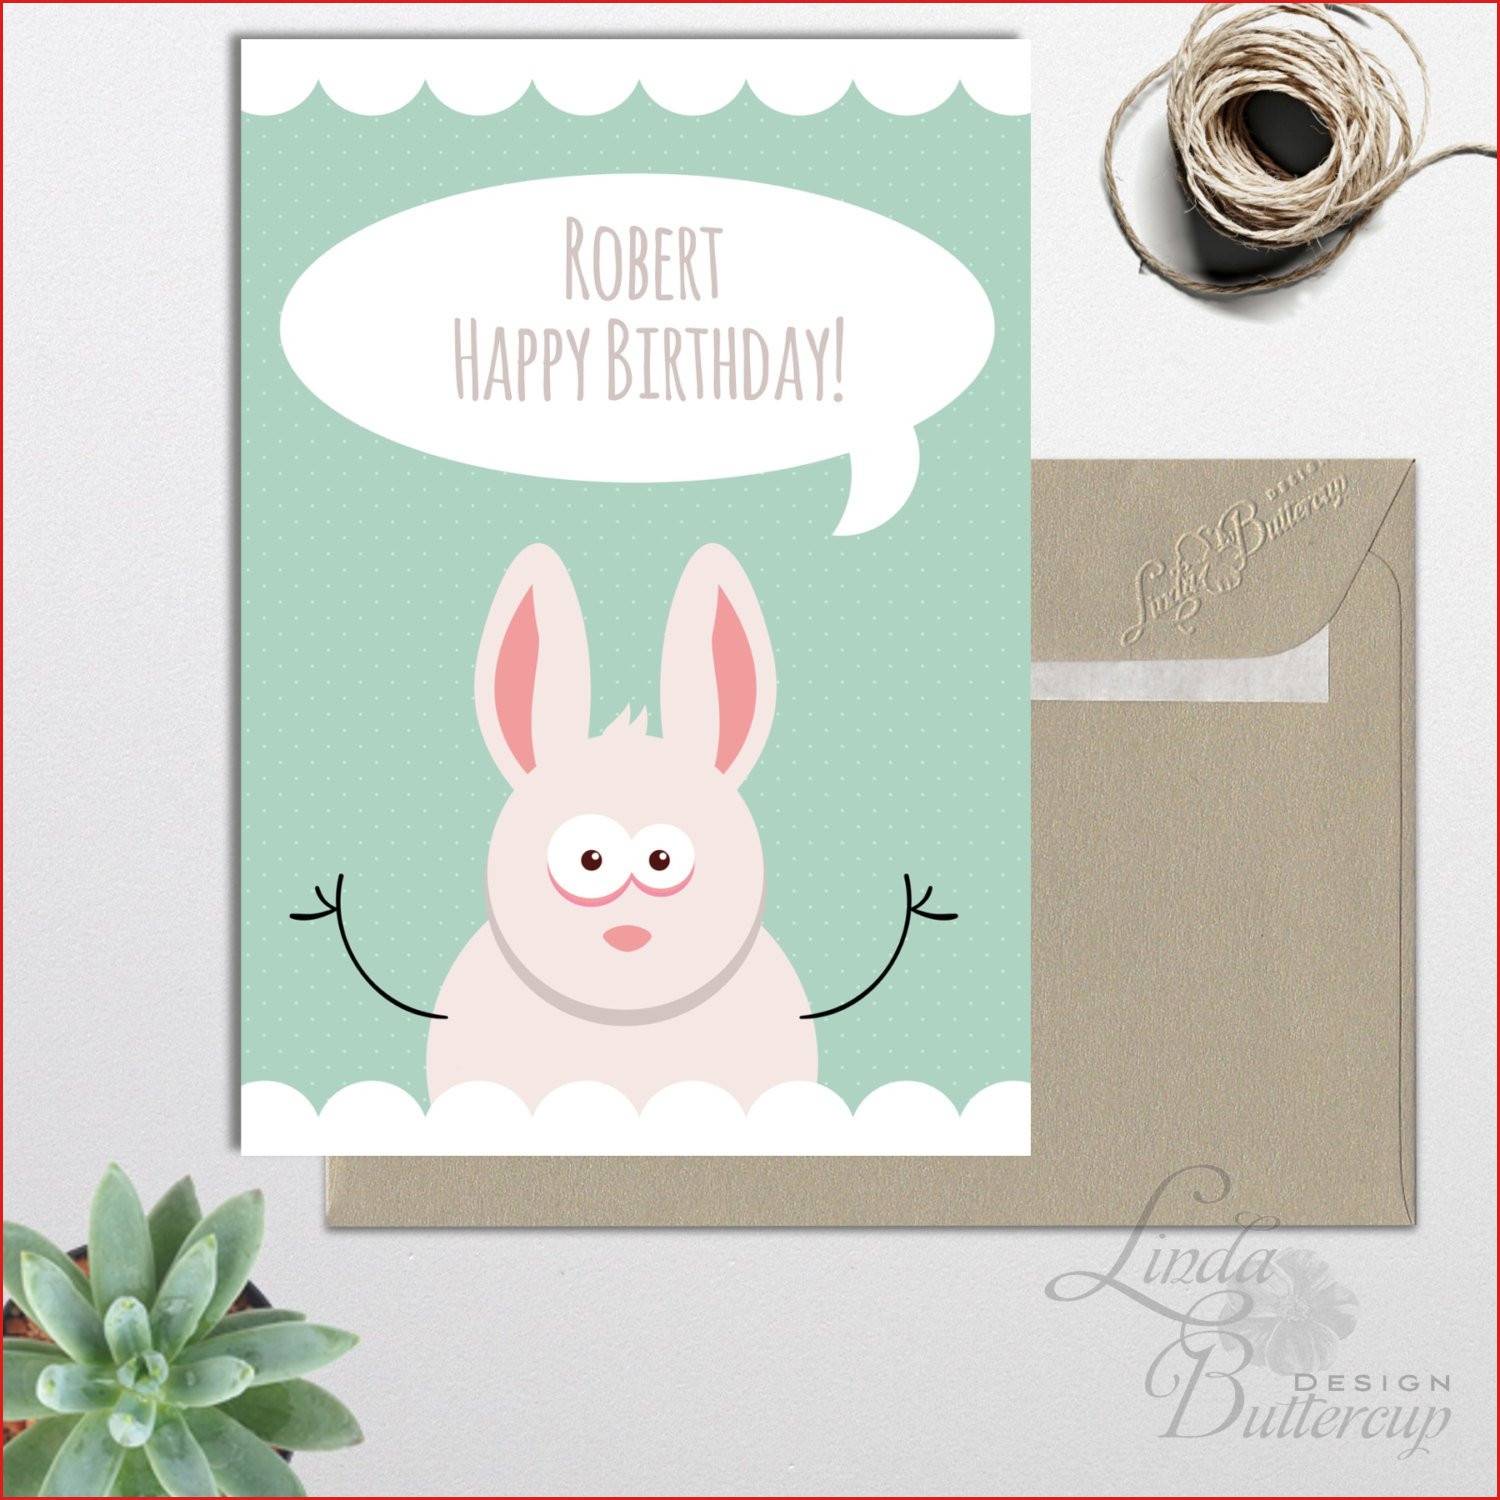 Free Customized Birthday Cards Online Personalized Birthday Card - Free Printable Funny Birthday Cards